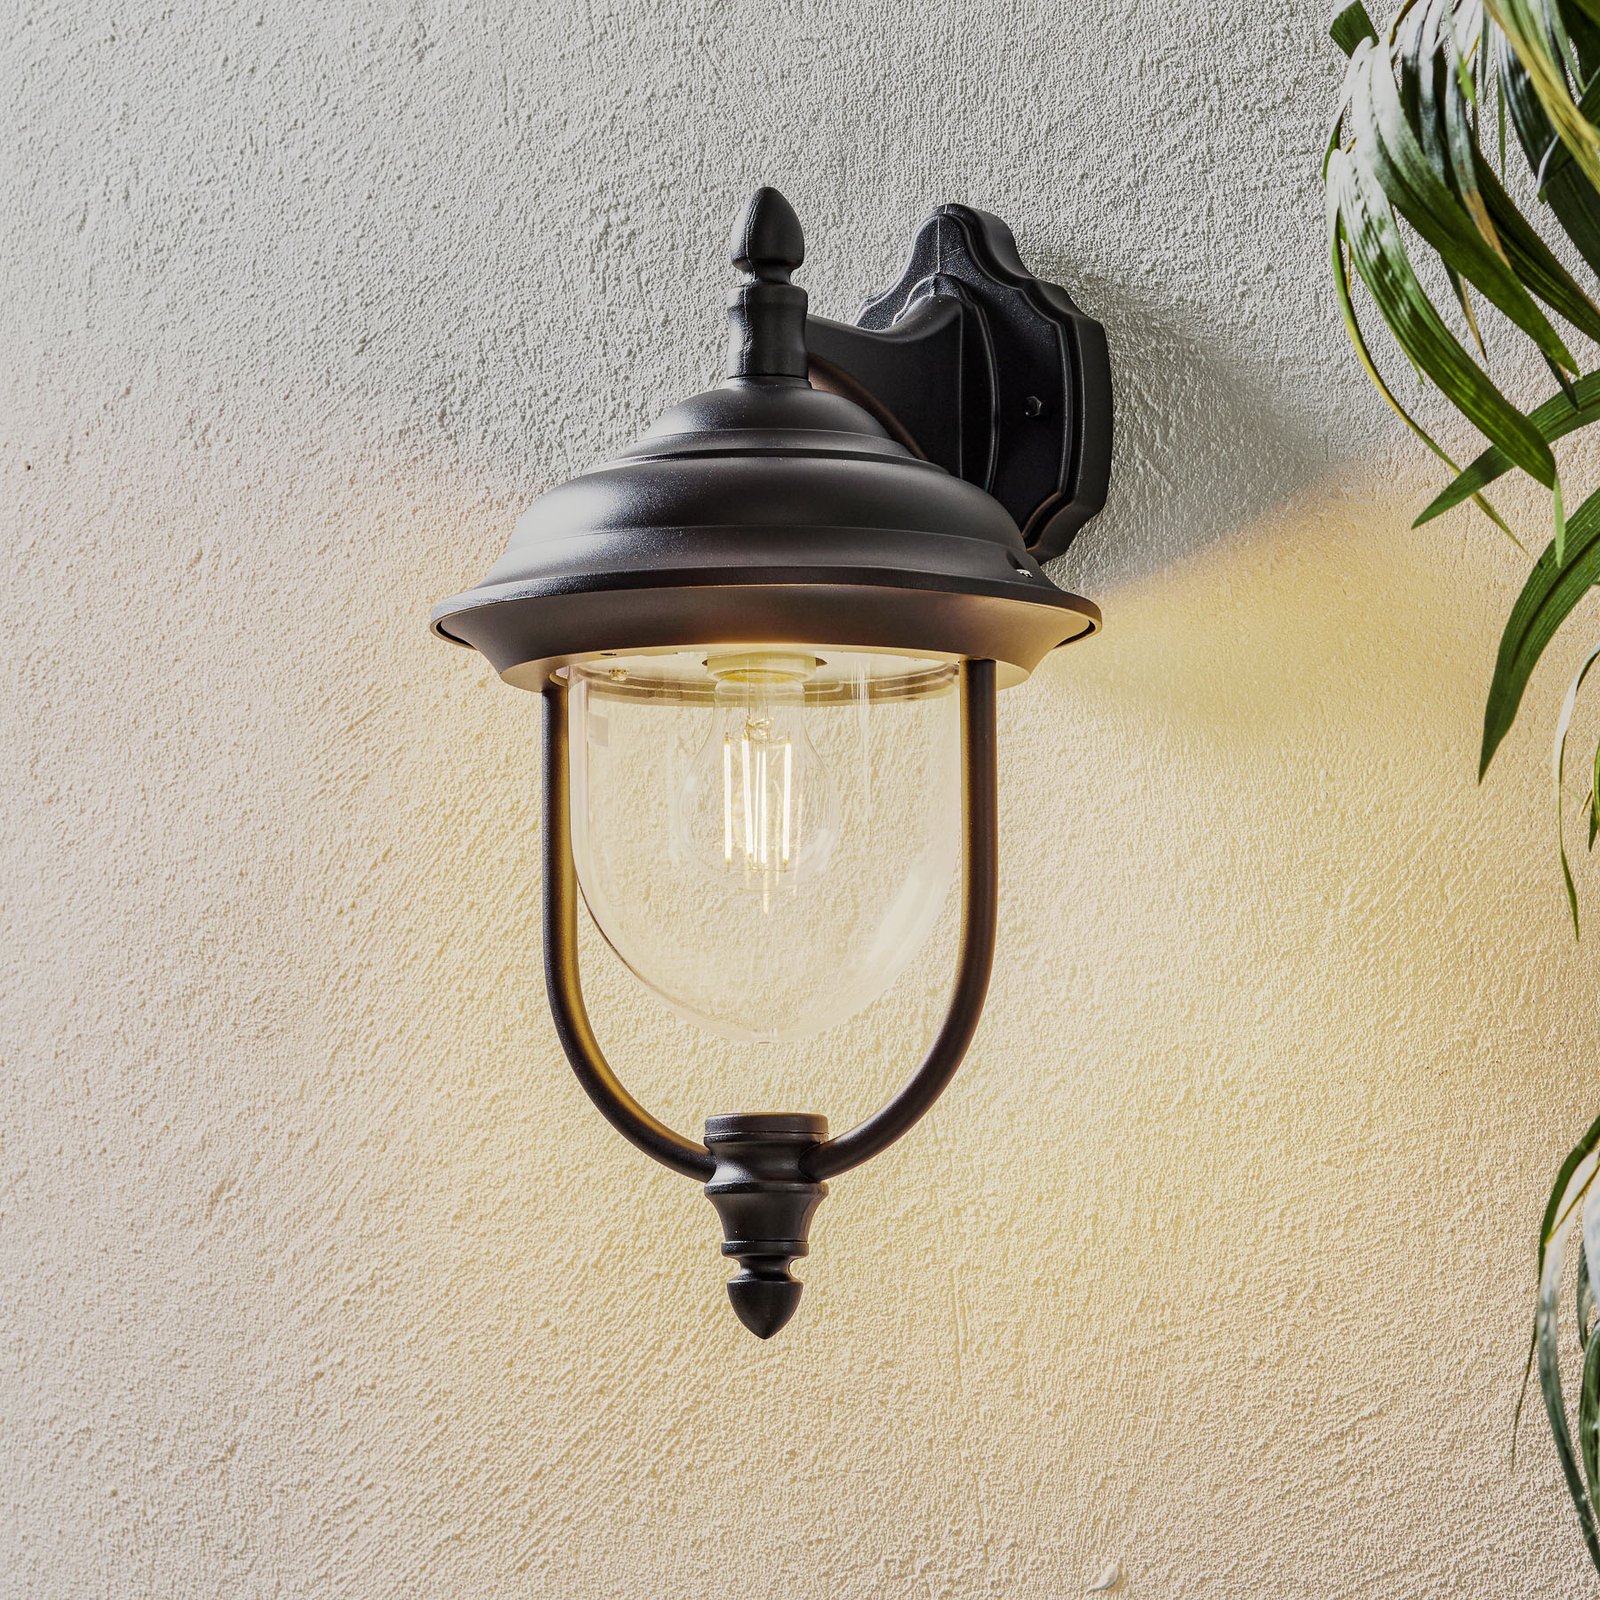 Parma outdoor wall light, hanging lantern in black